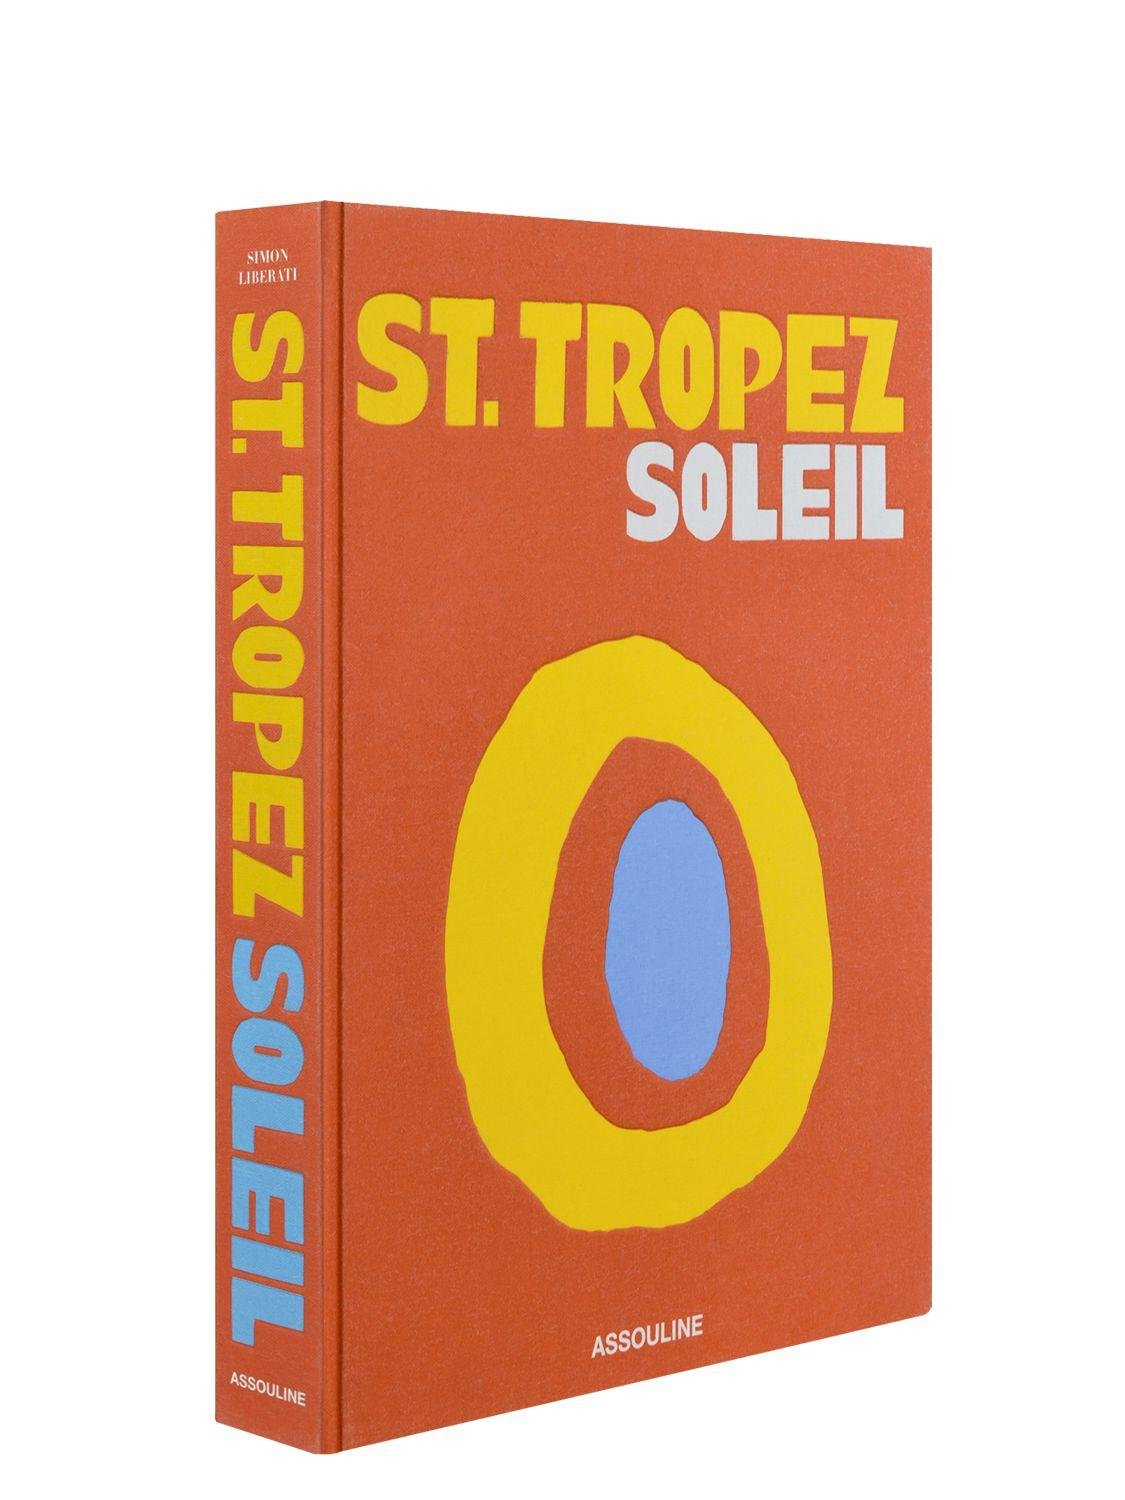 St. Tropez Soleil by ASSOULINE